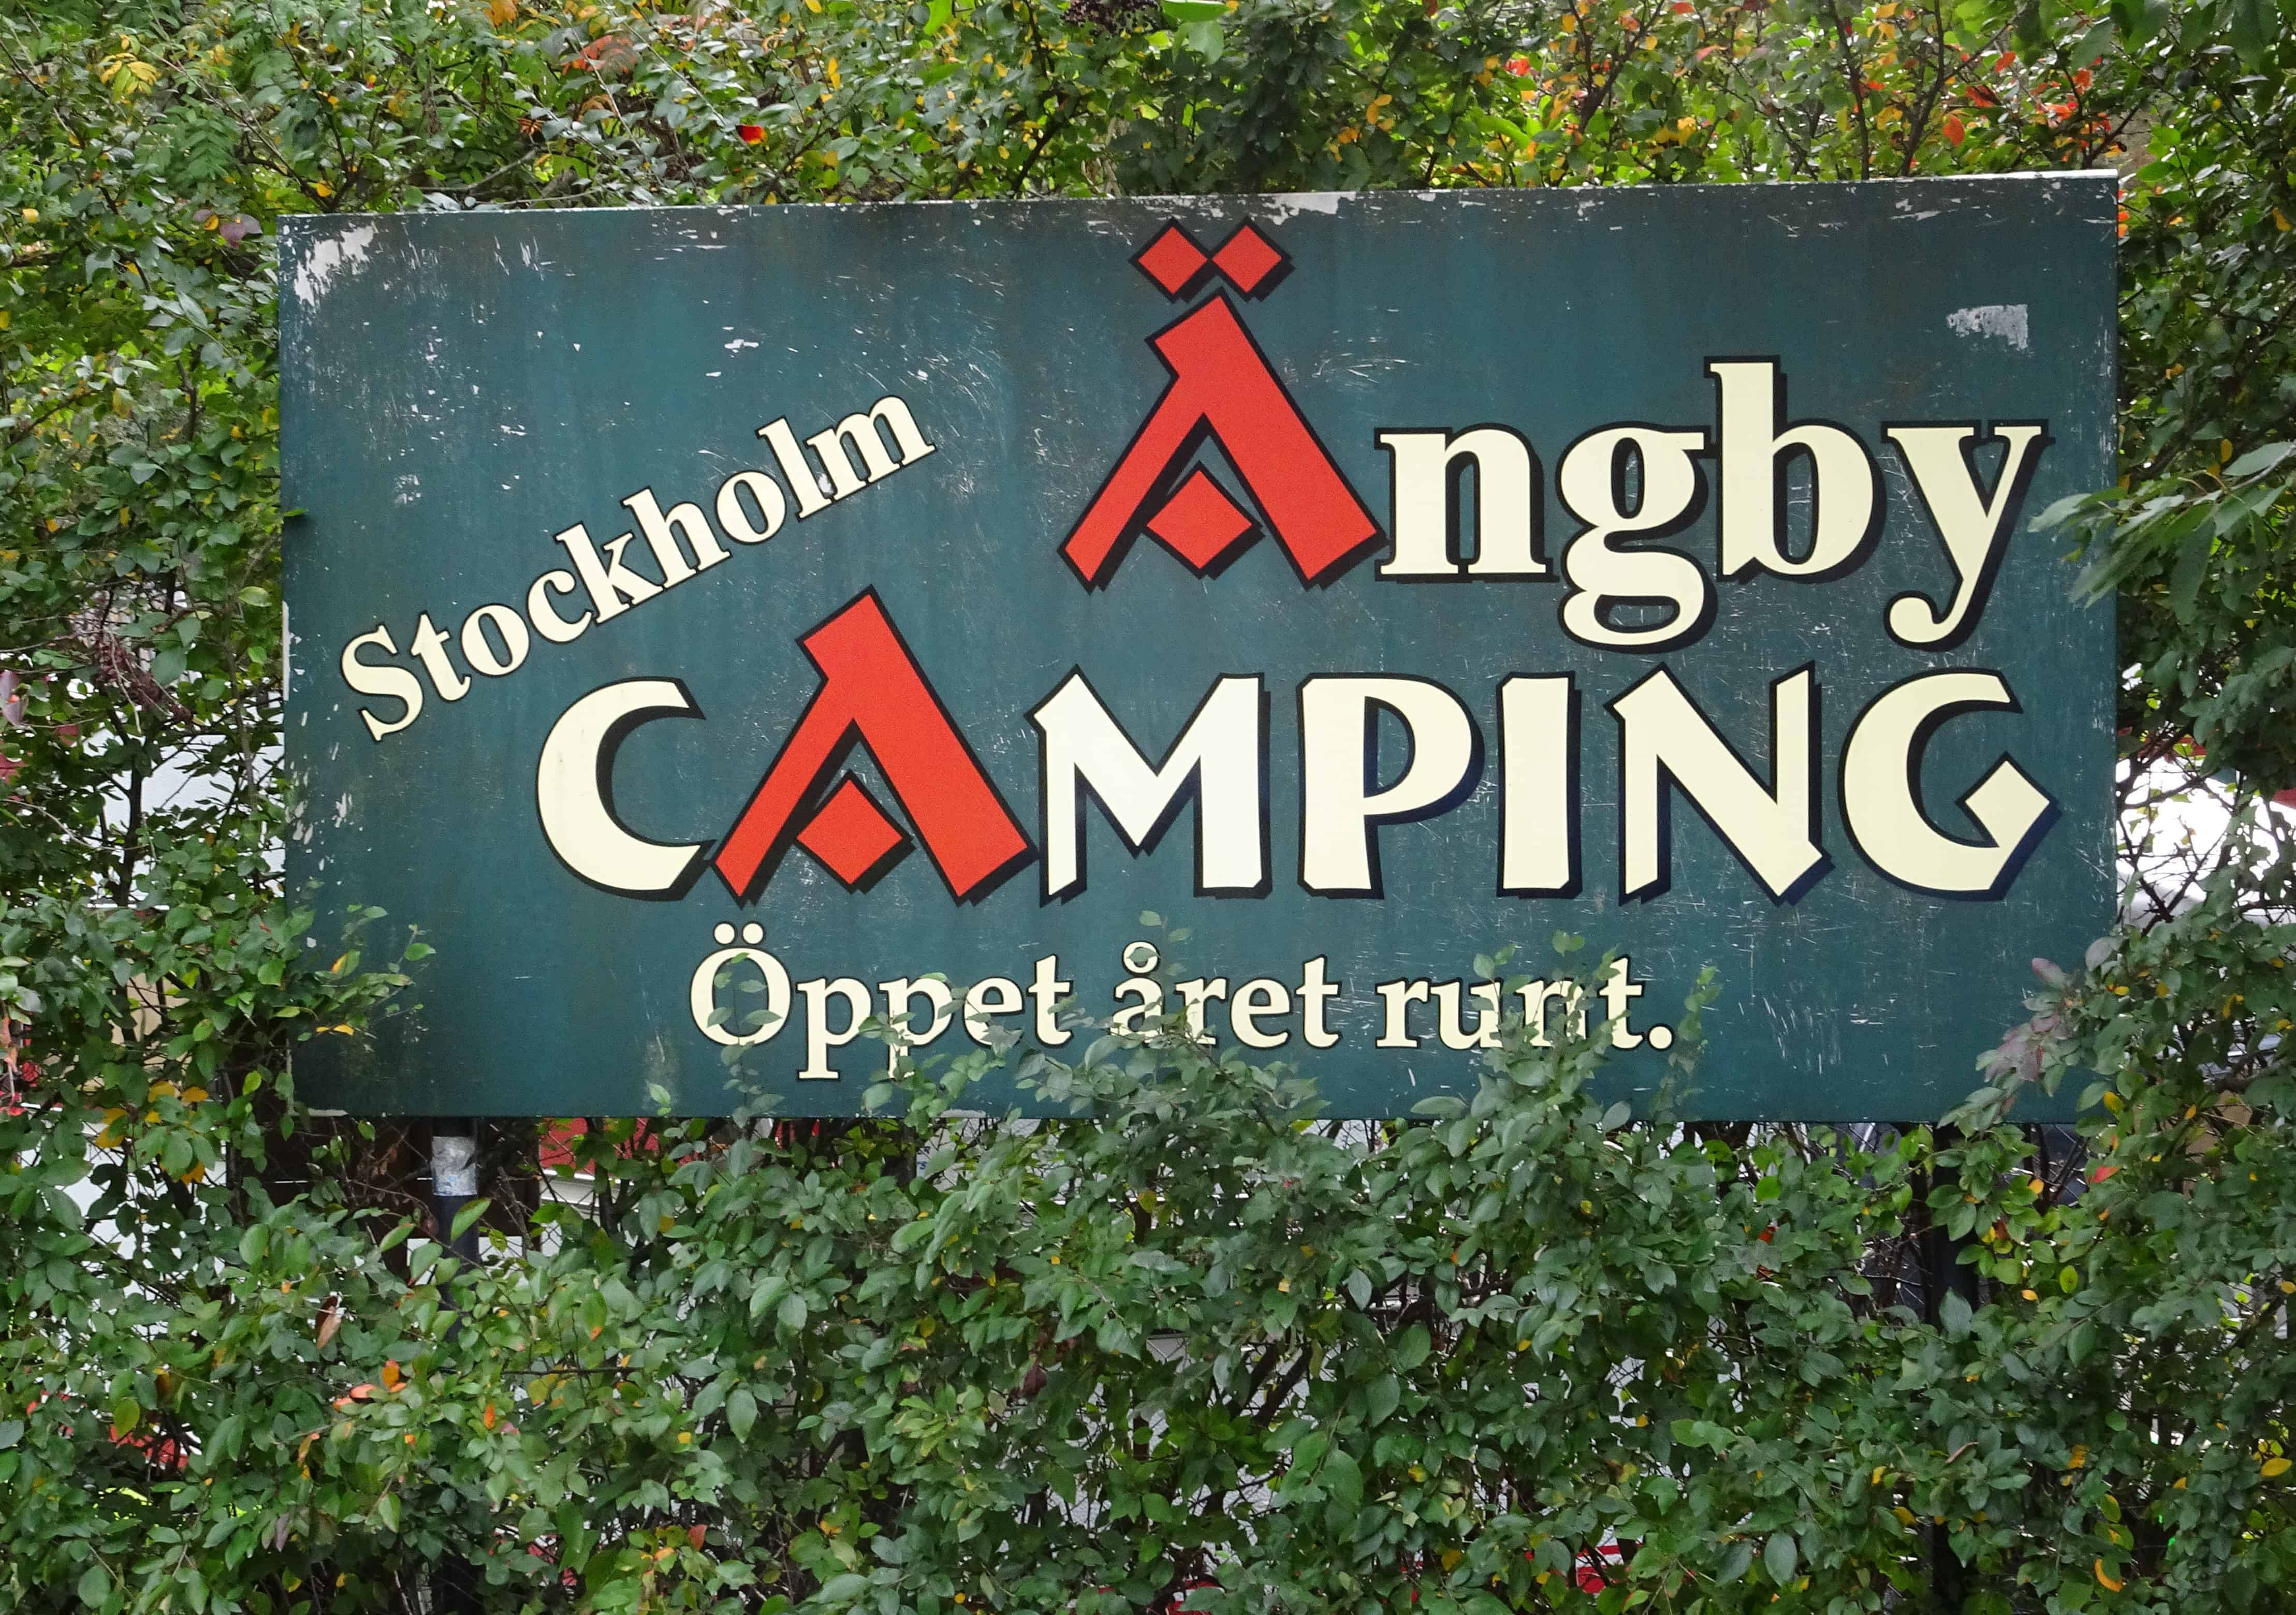 angby-camping